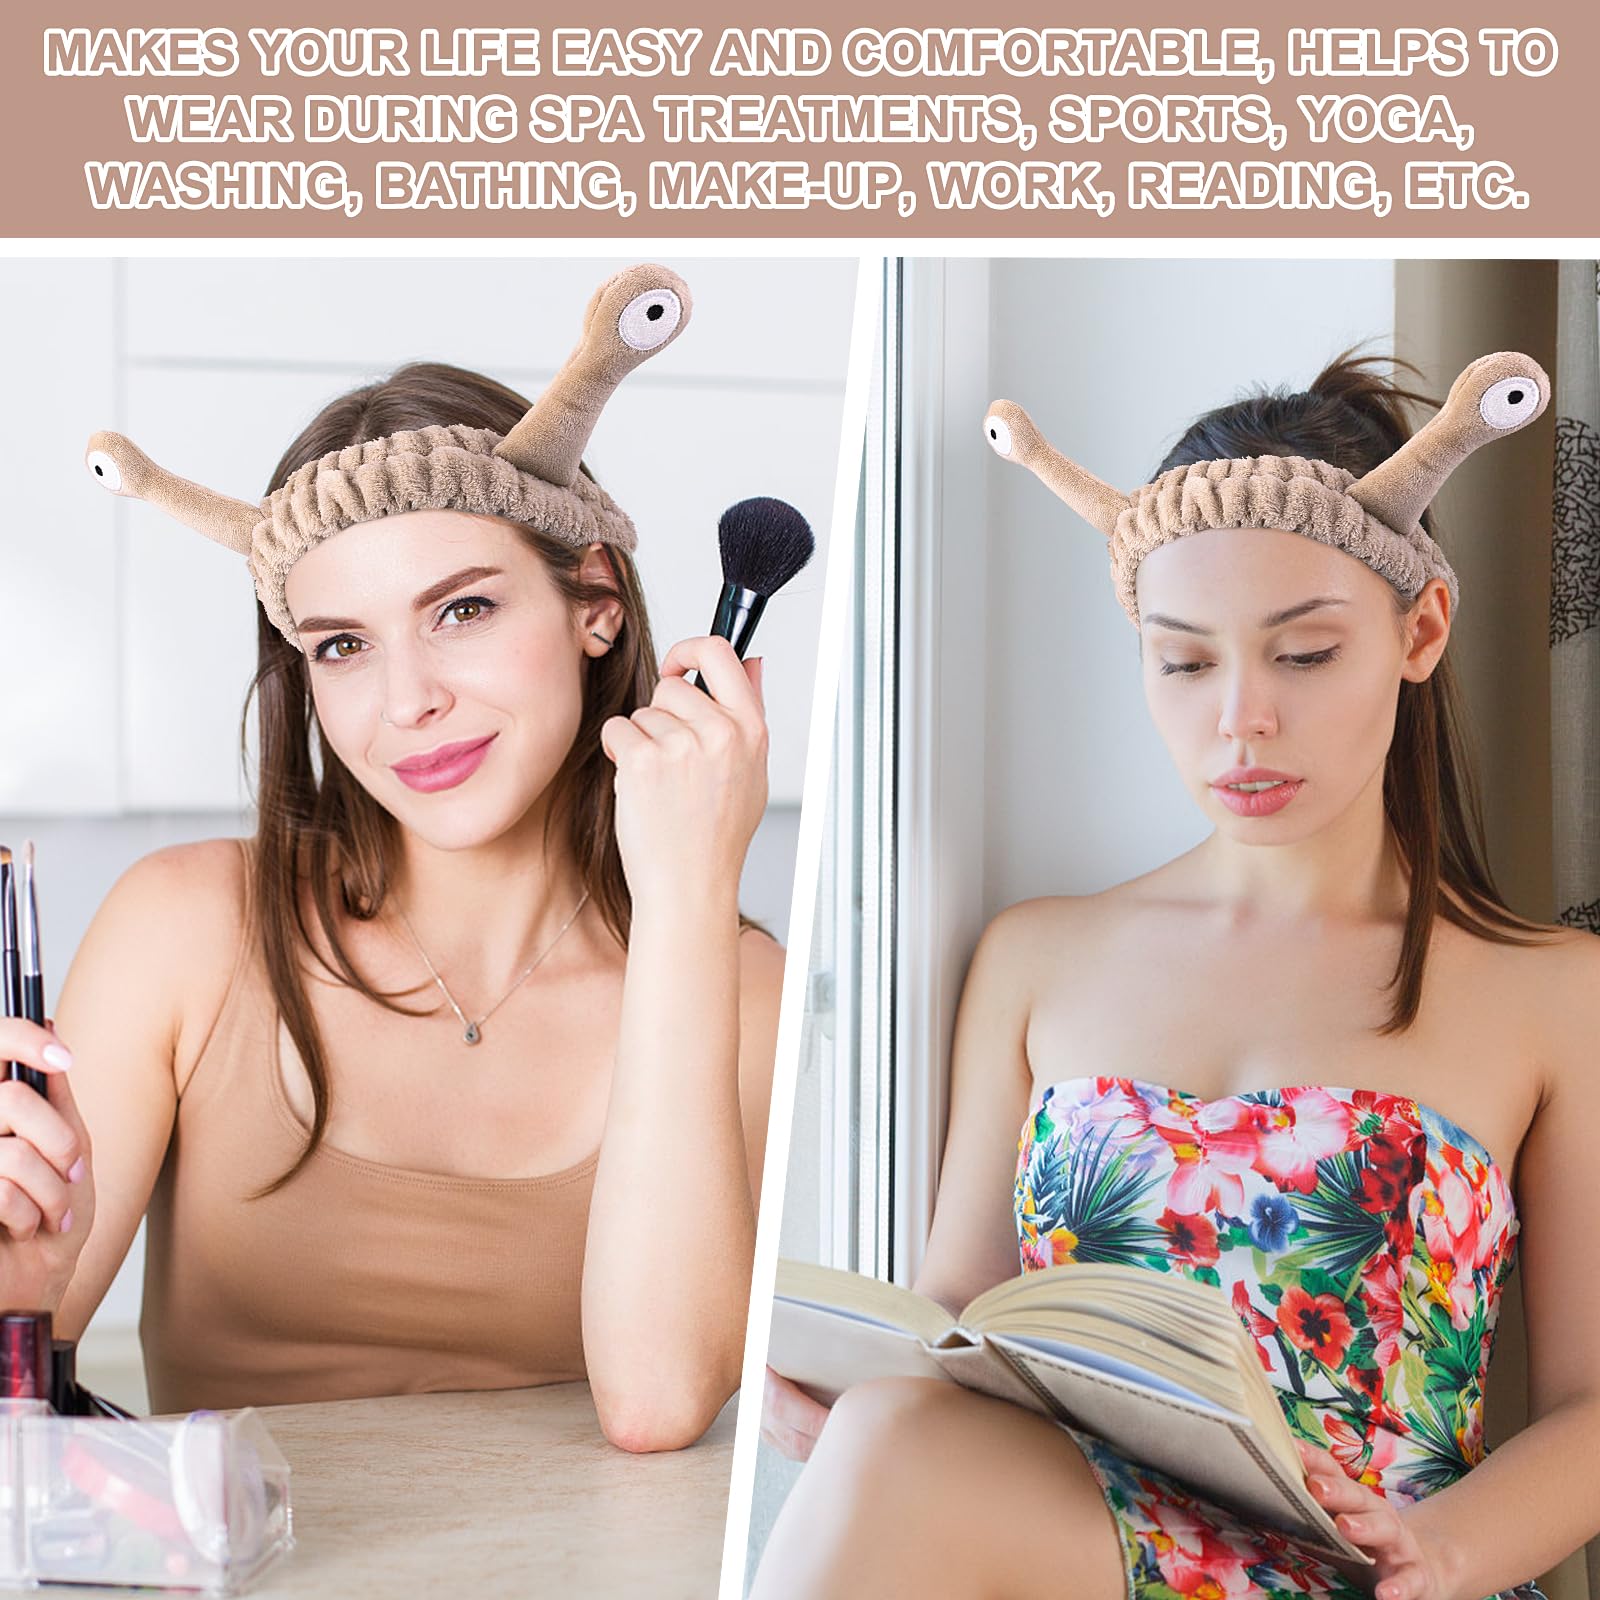 Face Wash Headband, Palm and Snail Spa Hair Bands Makeup Headbands Women Cartoon Cute Coral Fleece Elastic Headband Creative Hair Accessories for Washing Face Shower Sports Beauty Skincare (Khaki)